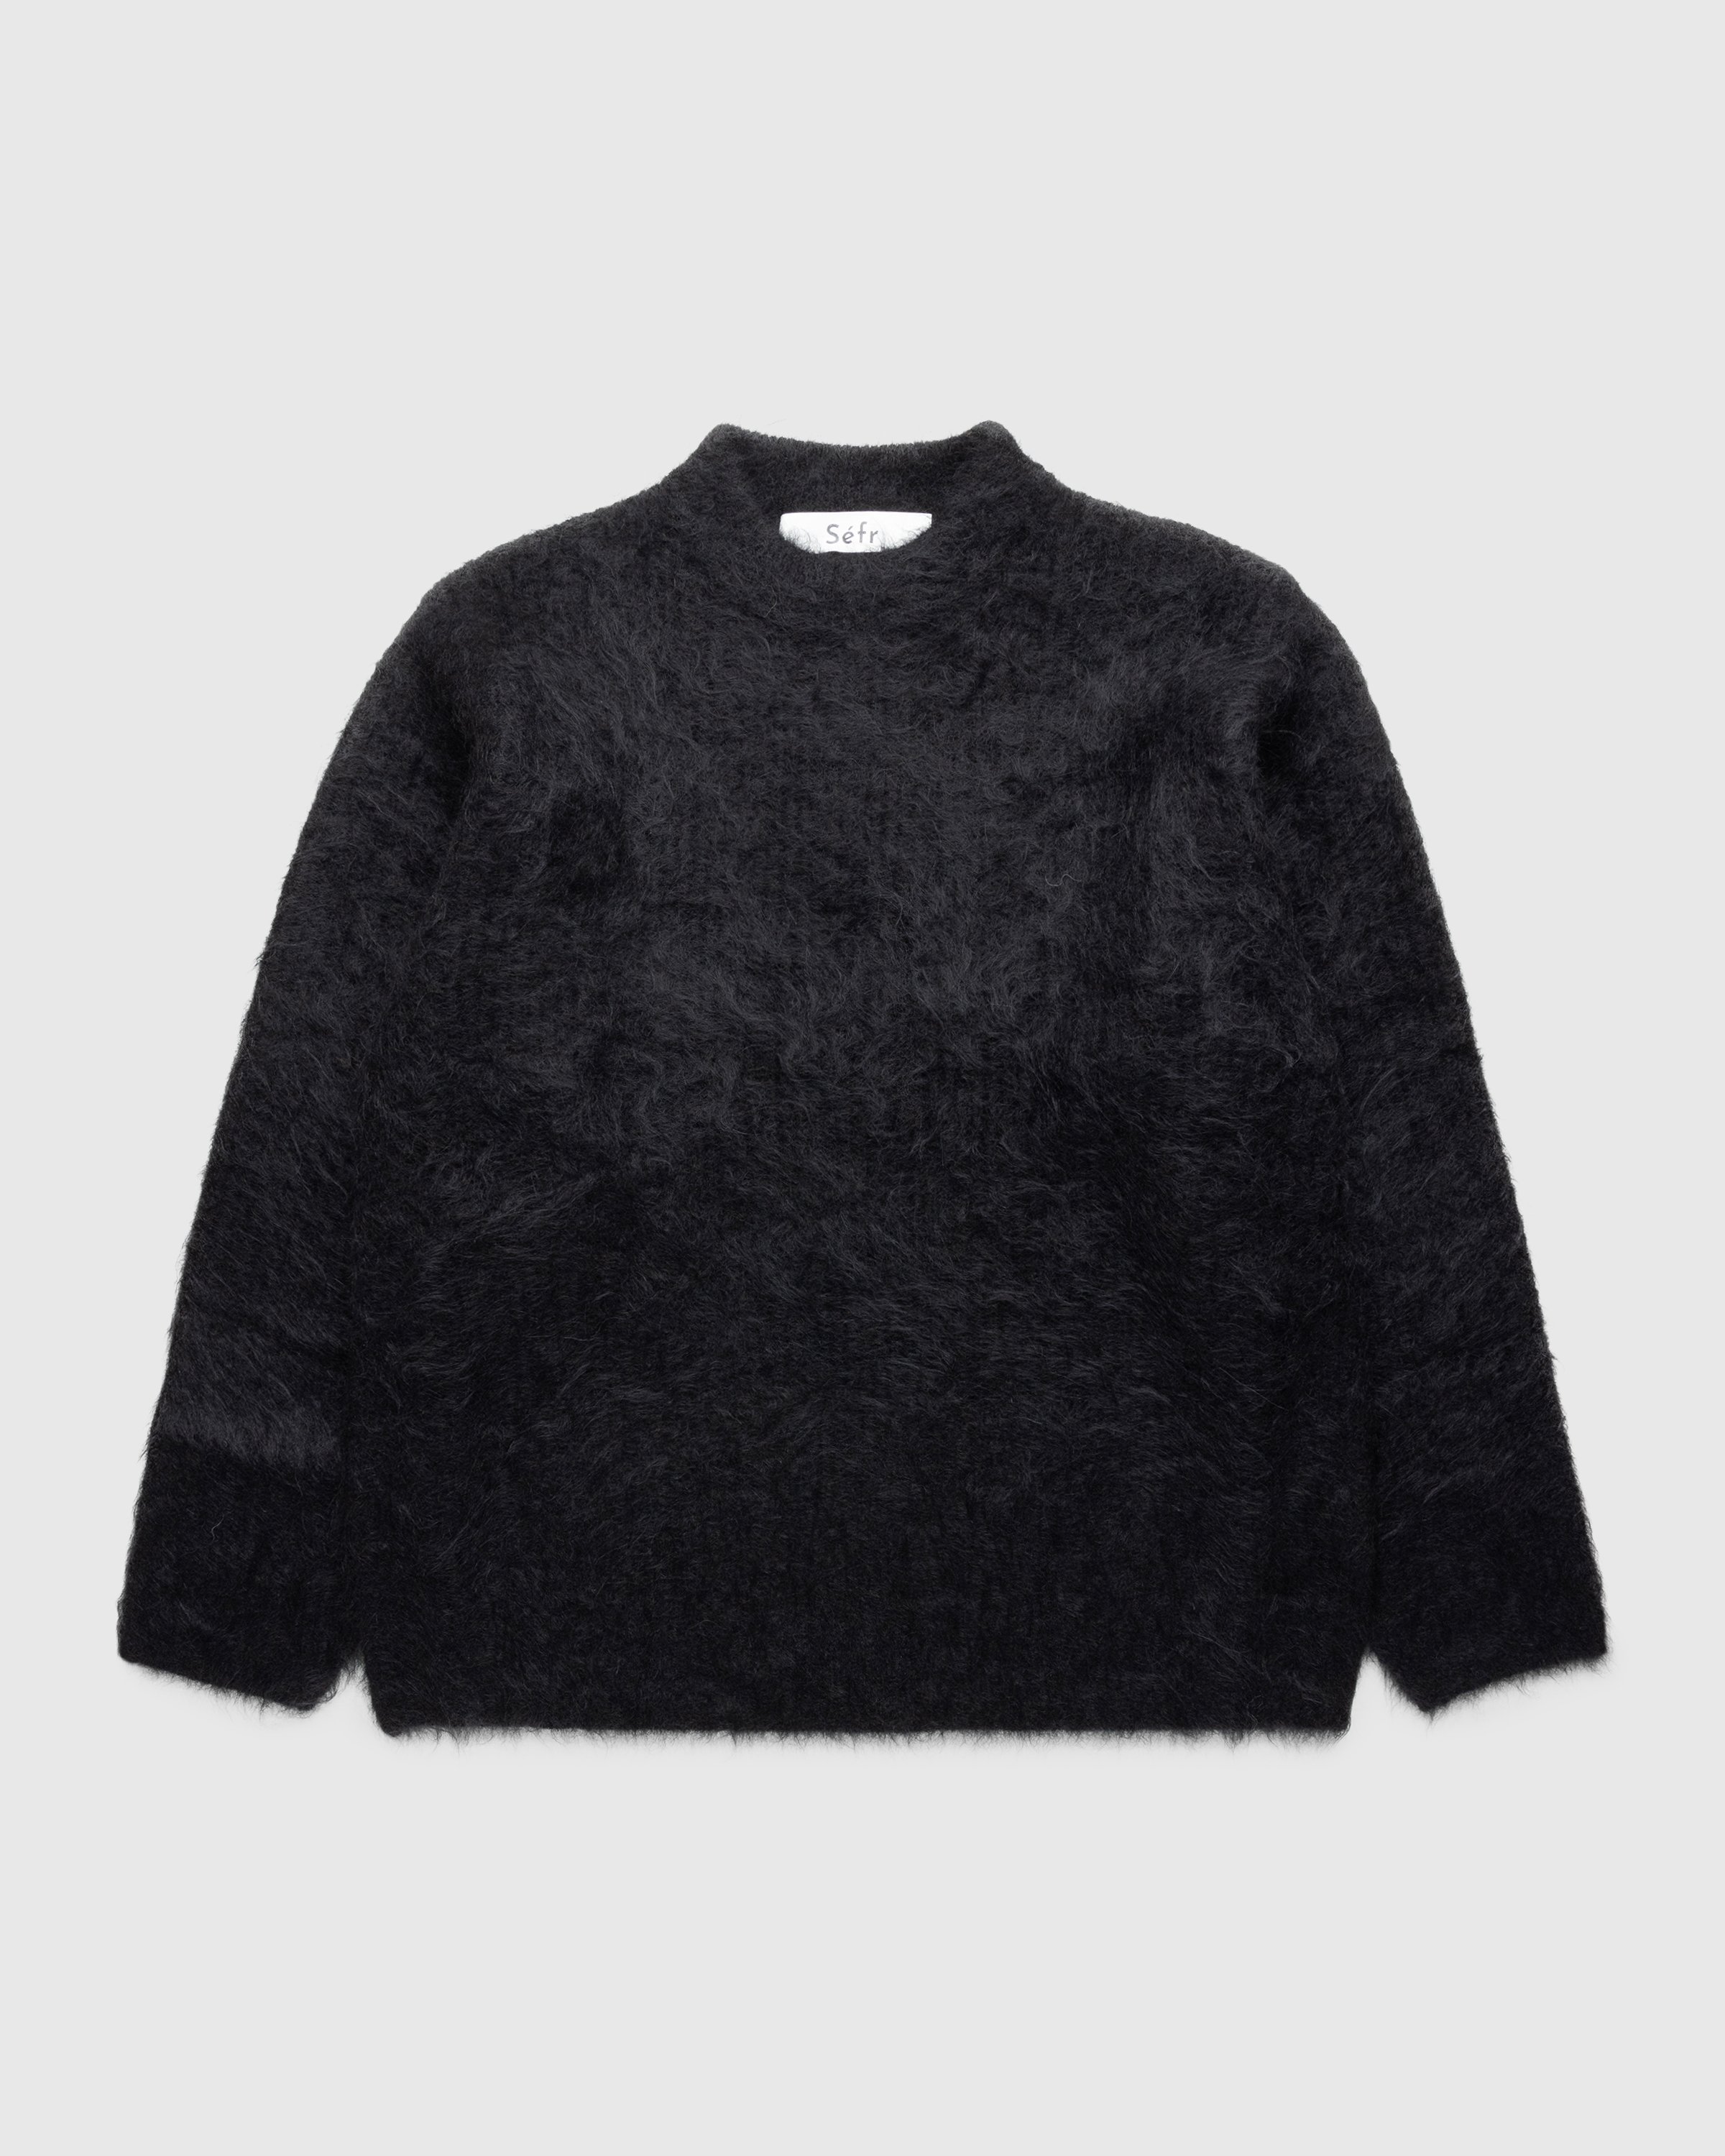 Séfr - Haru Sweater Black - Clothing - Black - Image 1